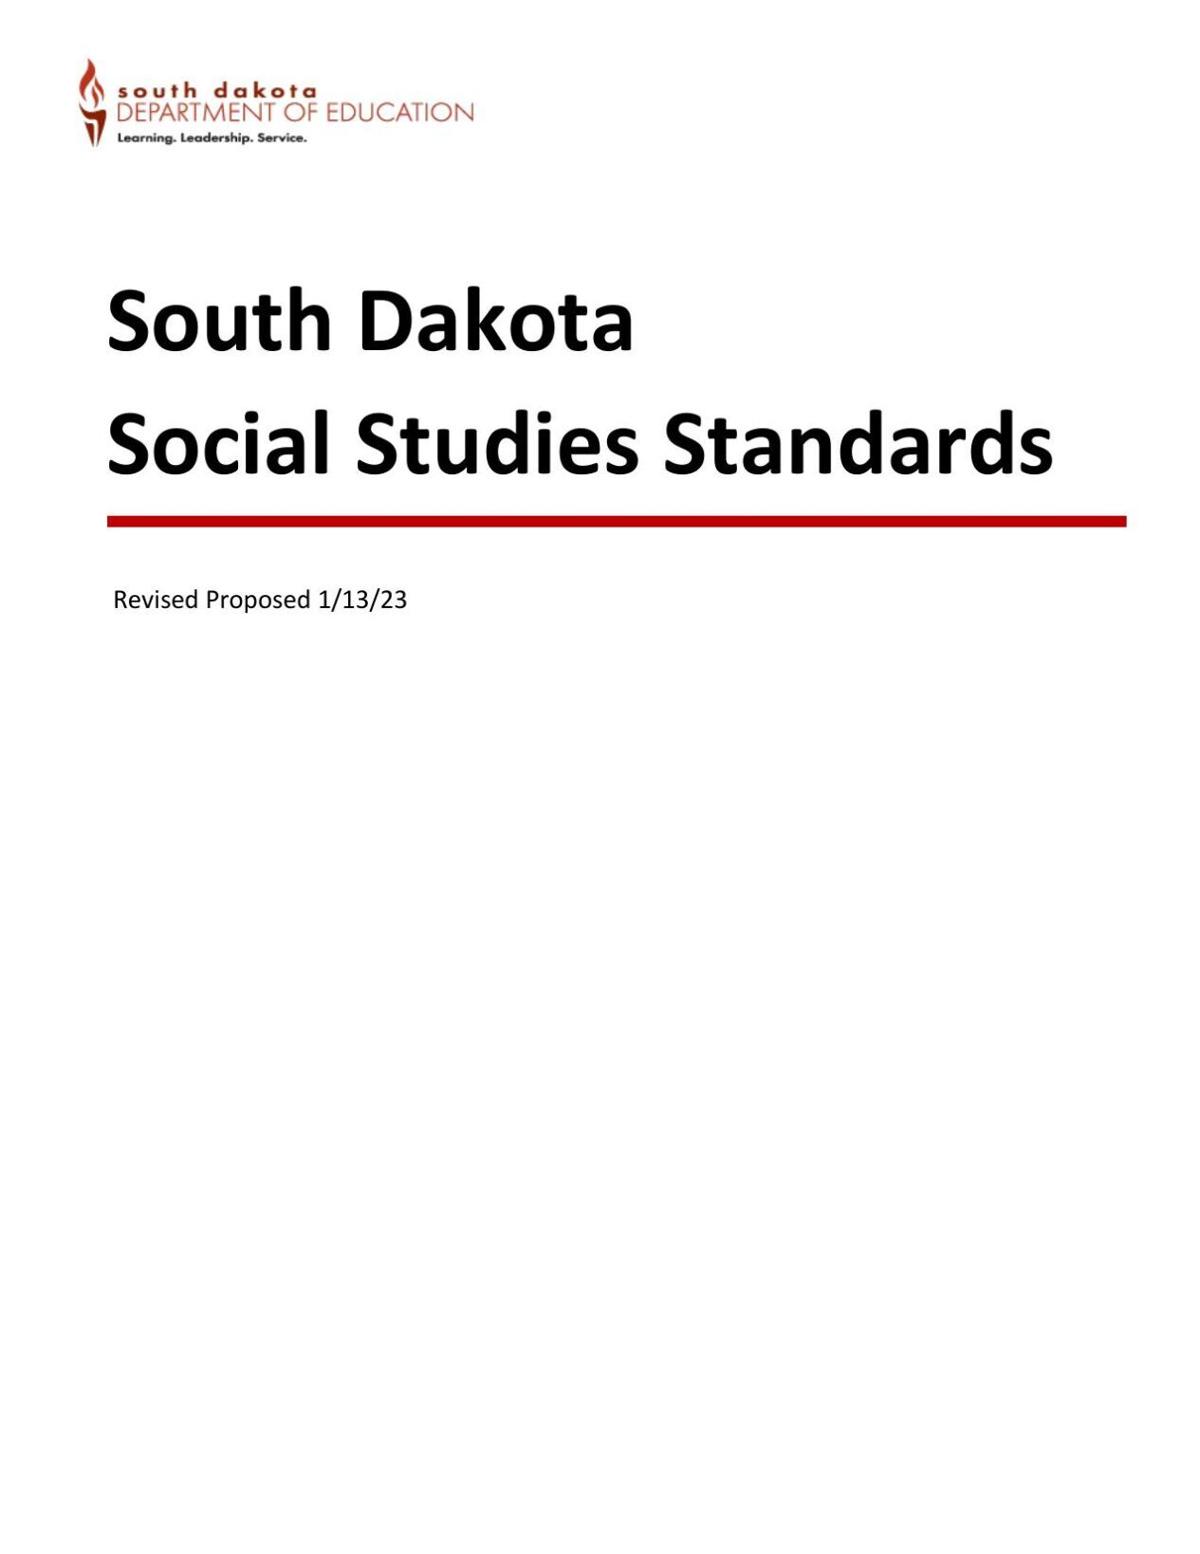 Proposed social studies standards